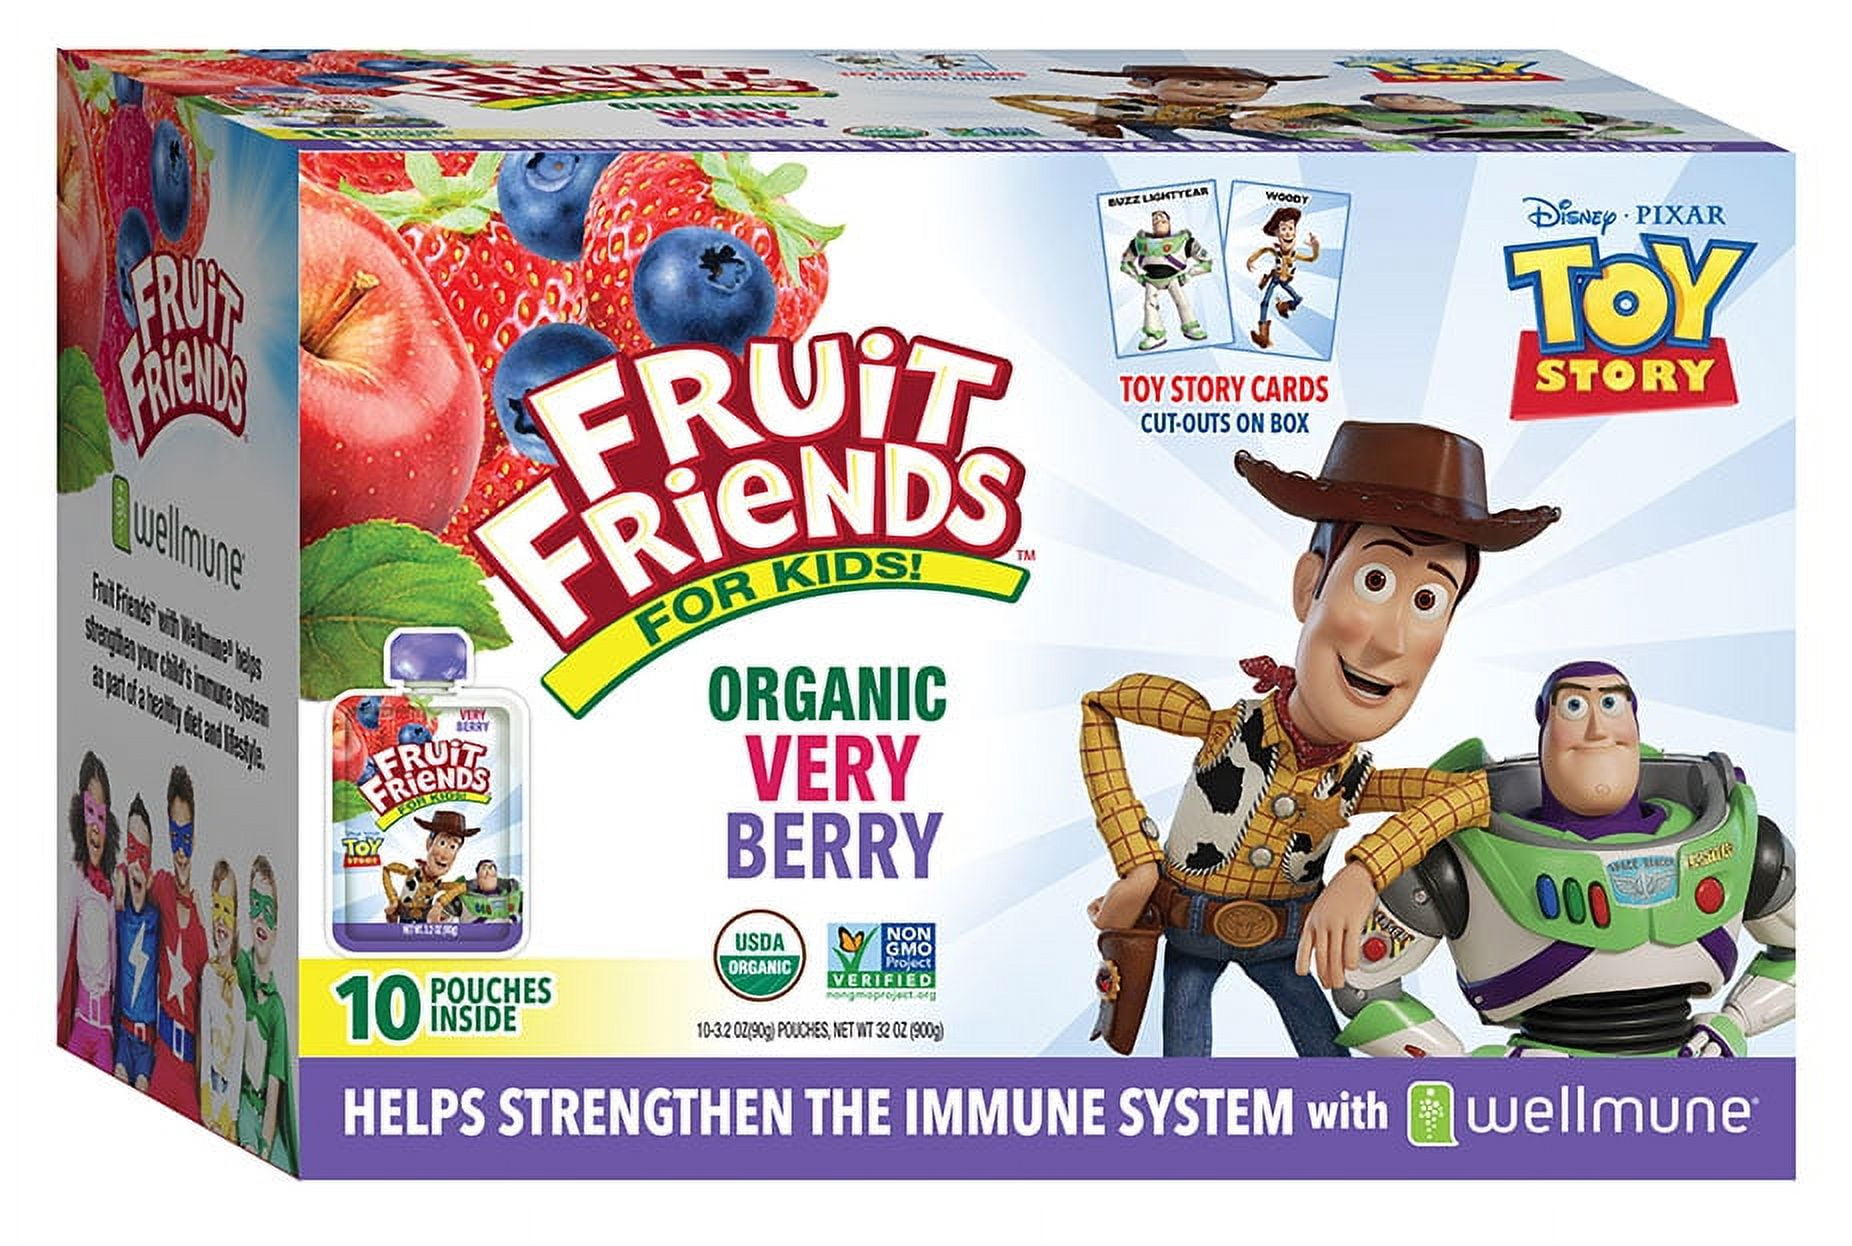 Fruit Friends Disney Toy Story Organic Very Berry Applesauce, 3.2